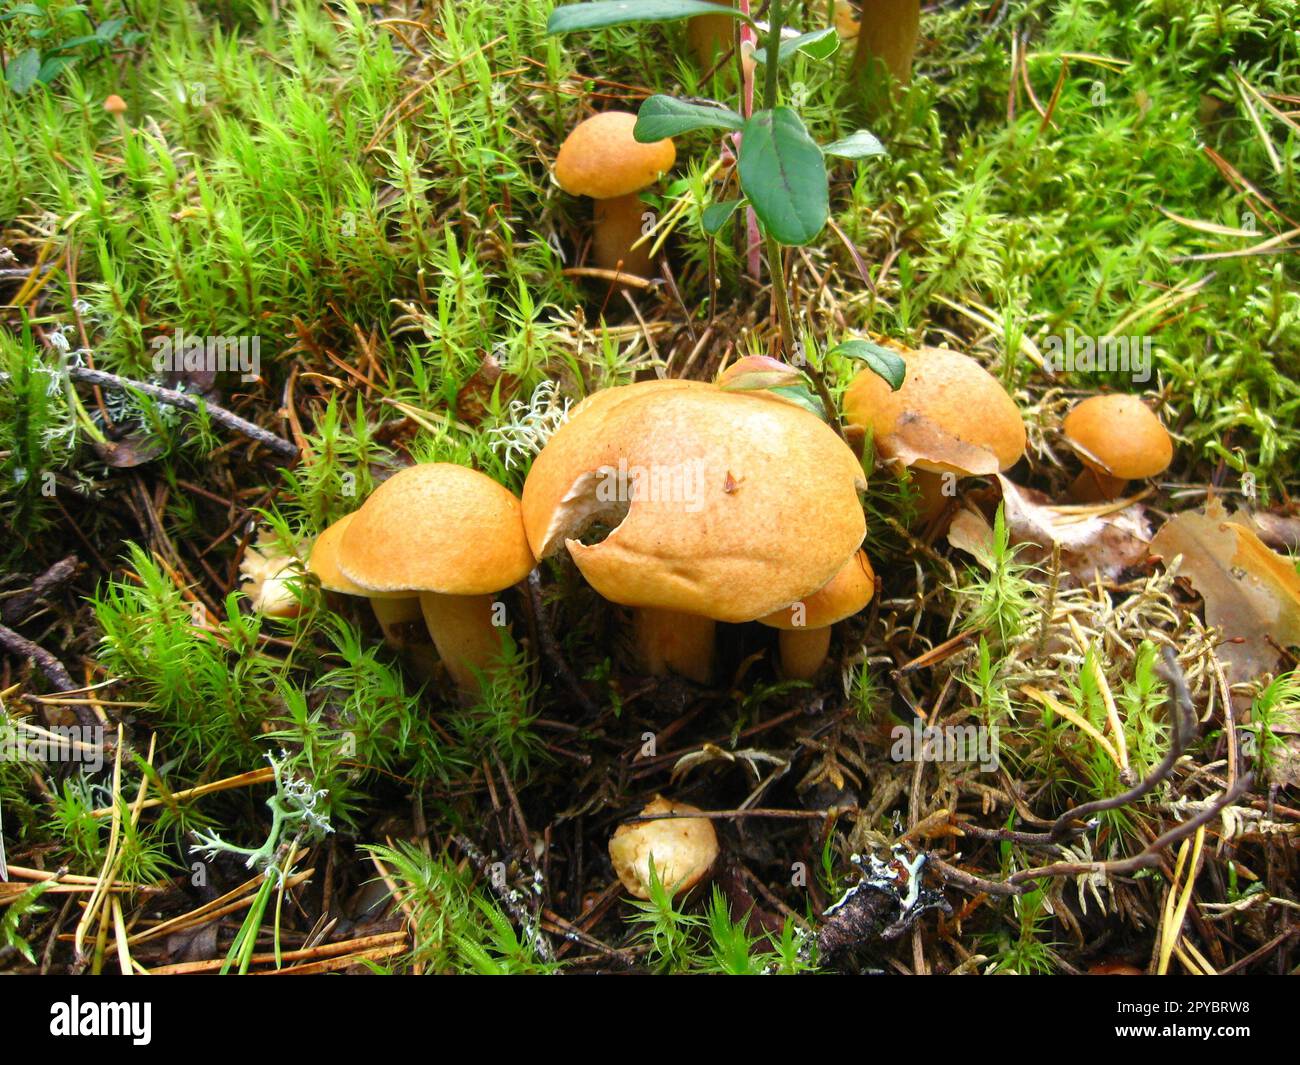 Red, orange forest mushrooms, similar to chanterelles or honey mushrooms. Mushroom eaten by animals or amphibians. Mushrooms in moss. Karelia, Russia Stock Photo